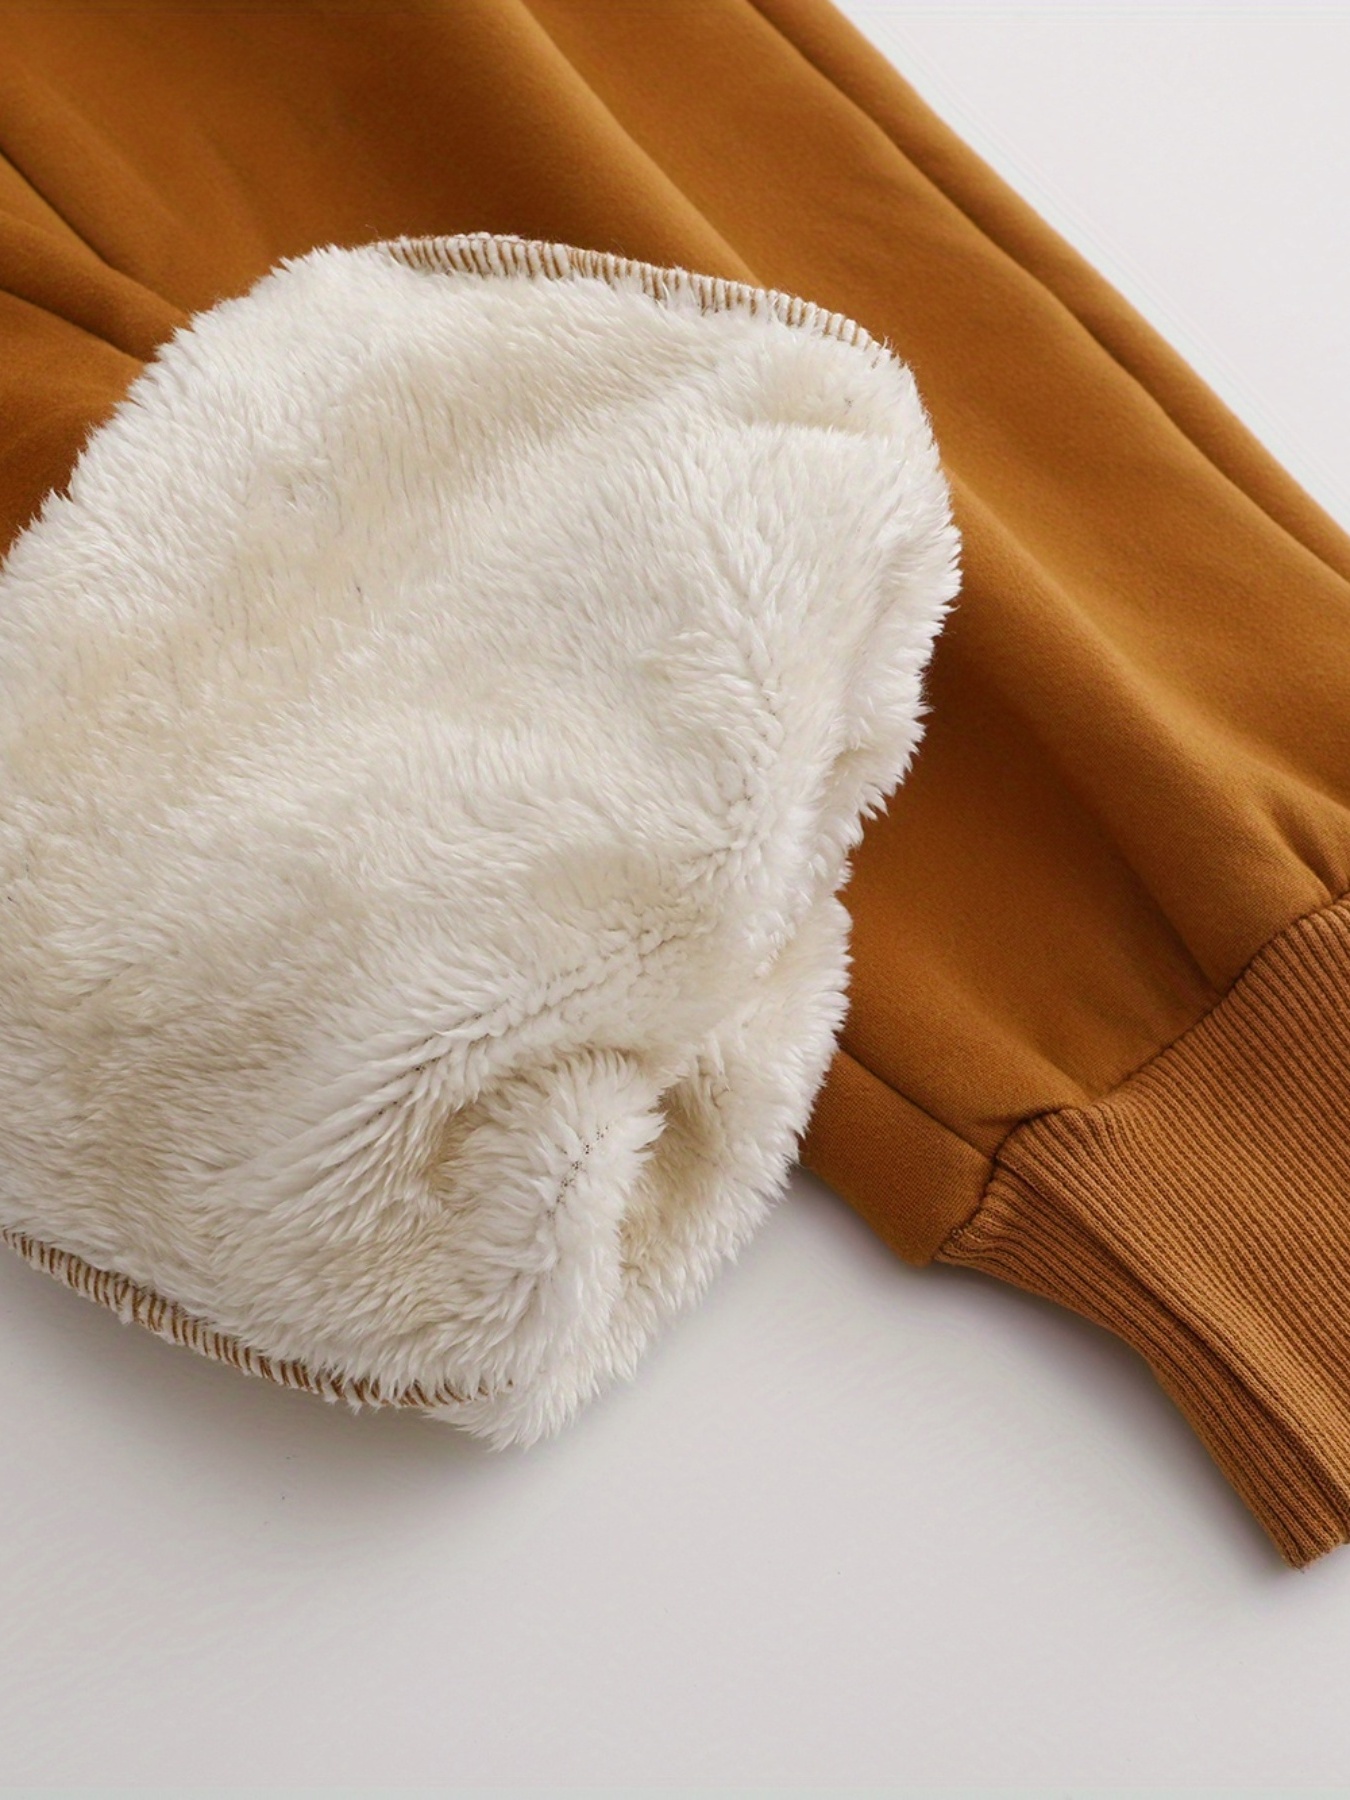 plush thermal pants, winter plush thermal pants casual drawstring pocket pants womens clothing details 13